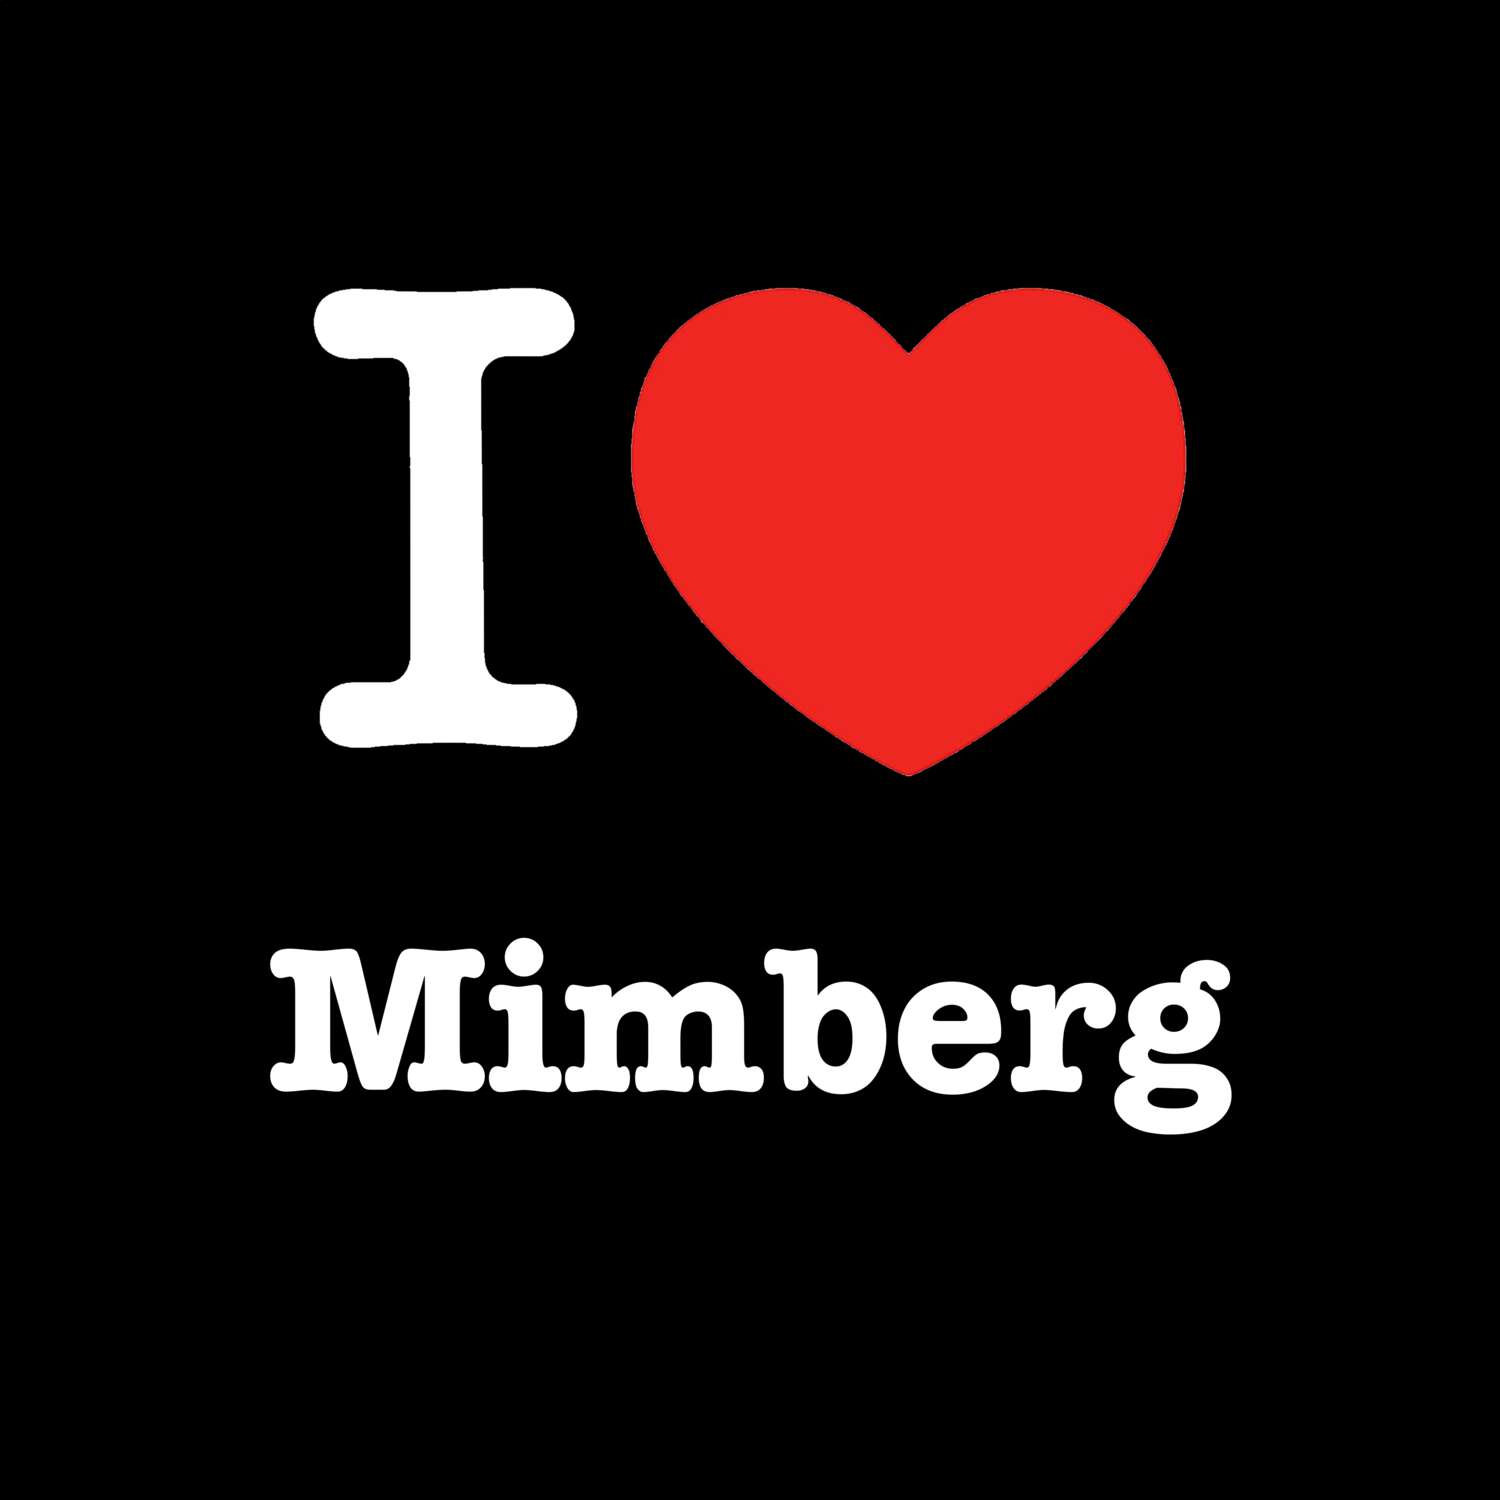 Mimberg T-Shirt »I love«